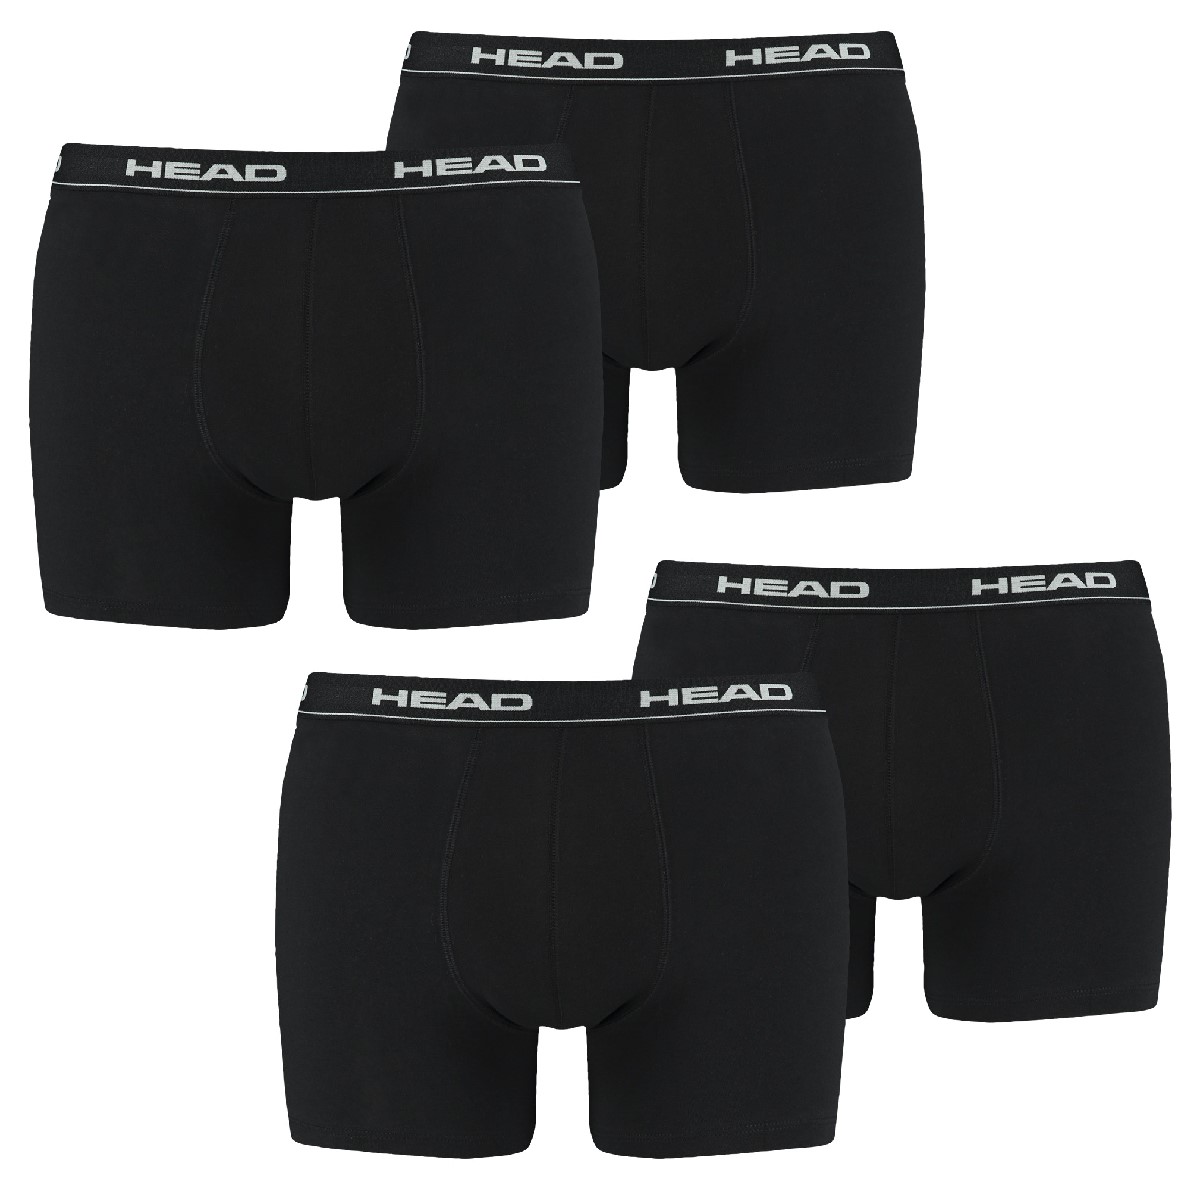 HEAD Herren Boxer Shorts Basic 2er Pack, schwarz(Schwarz),S